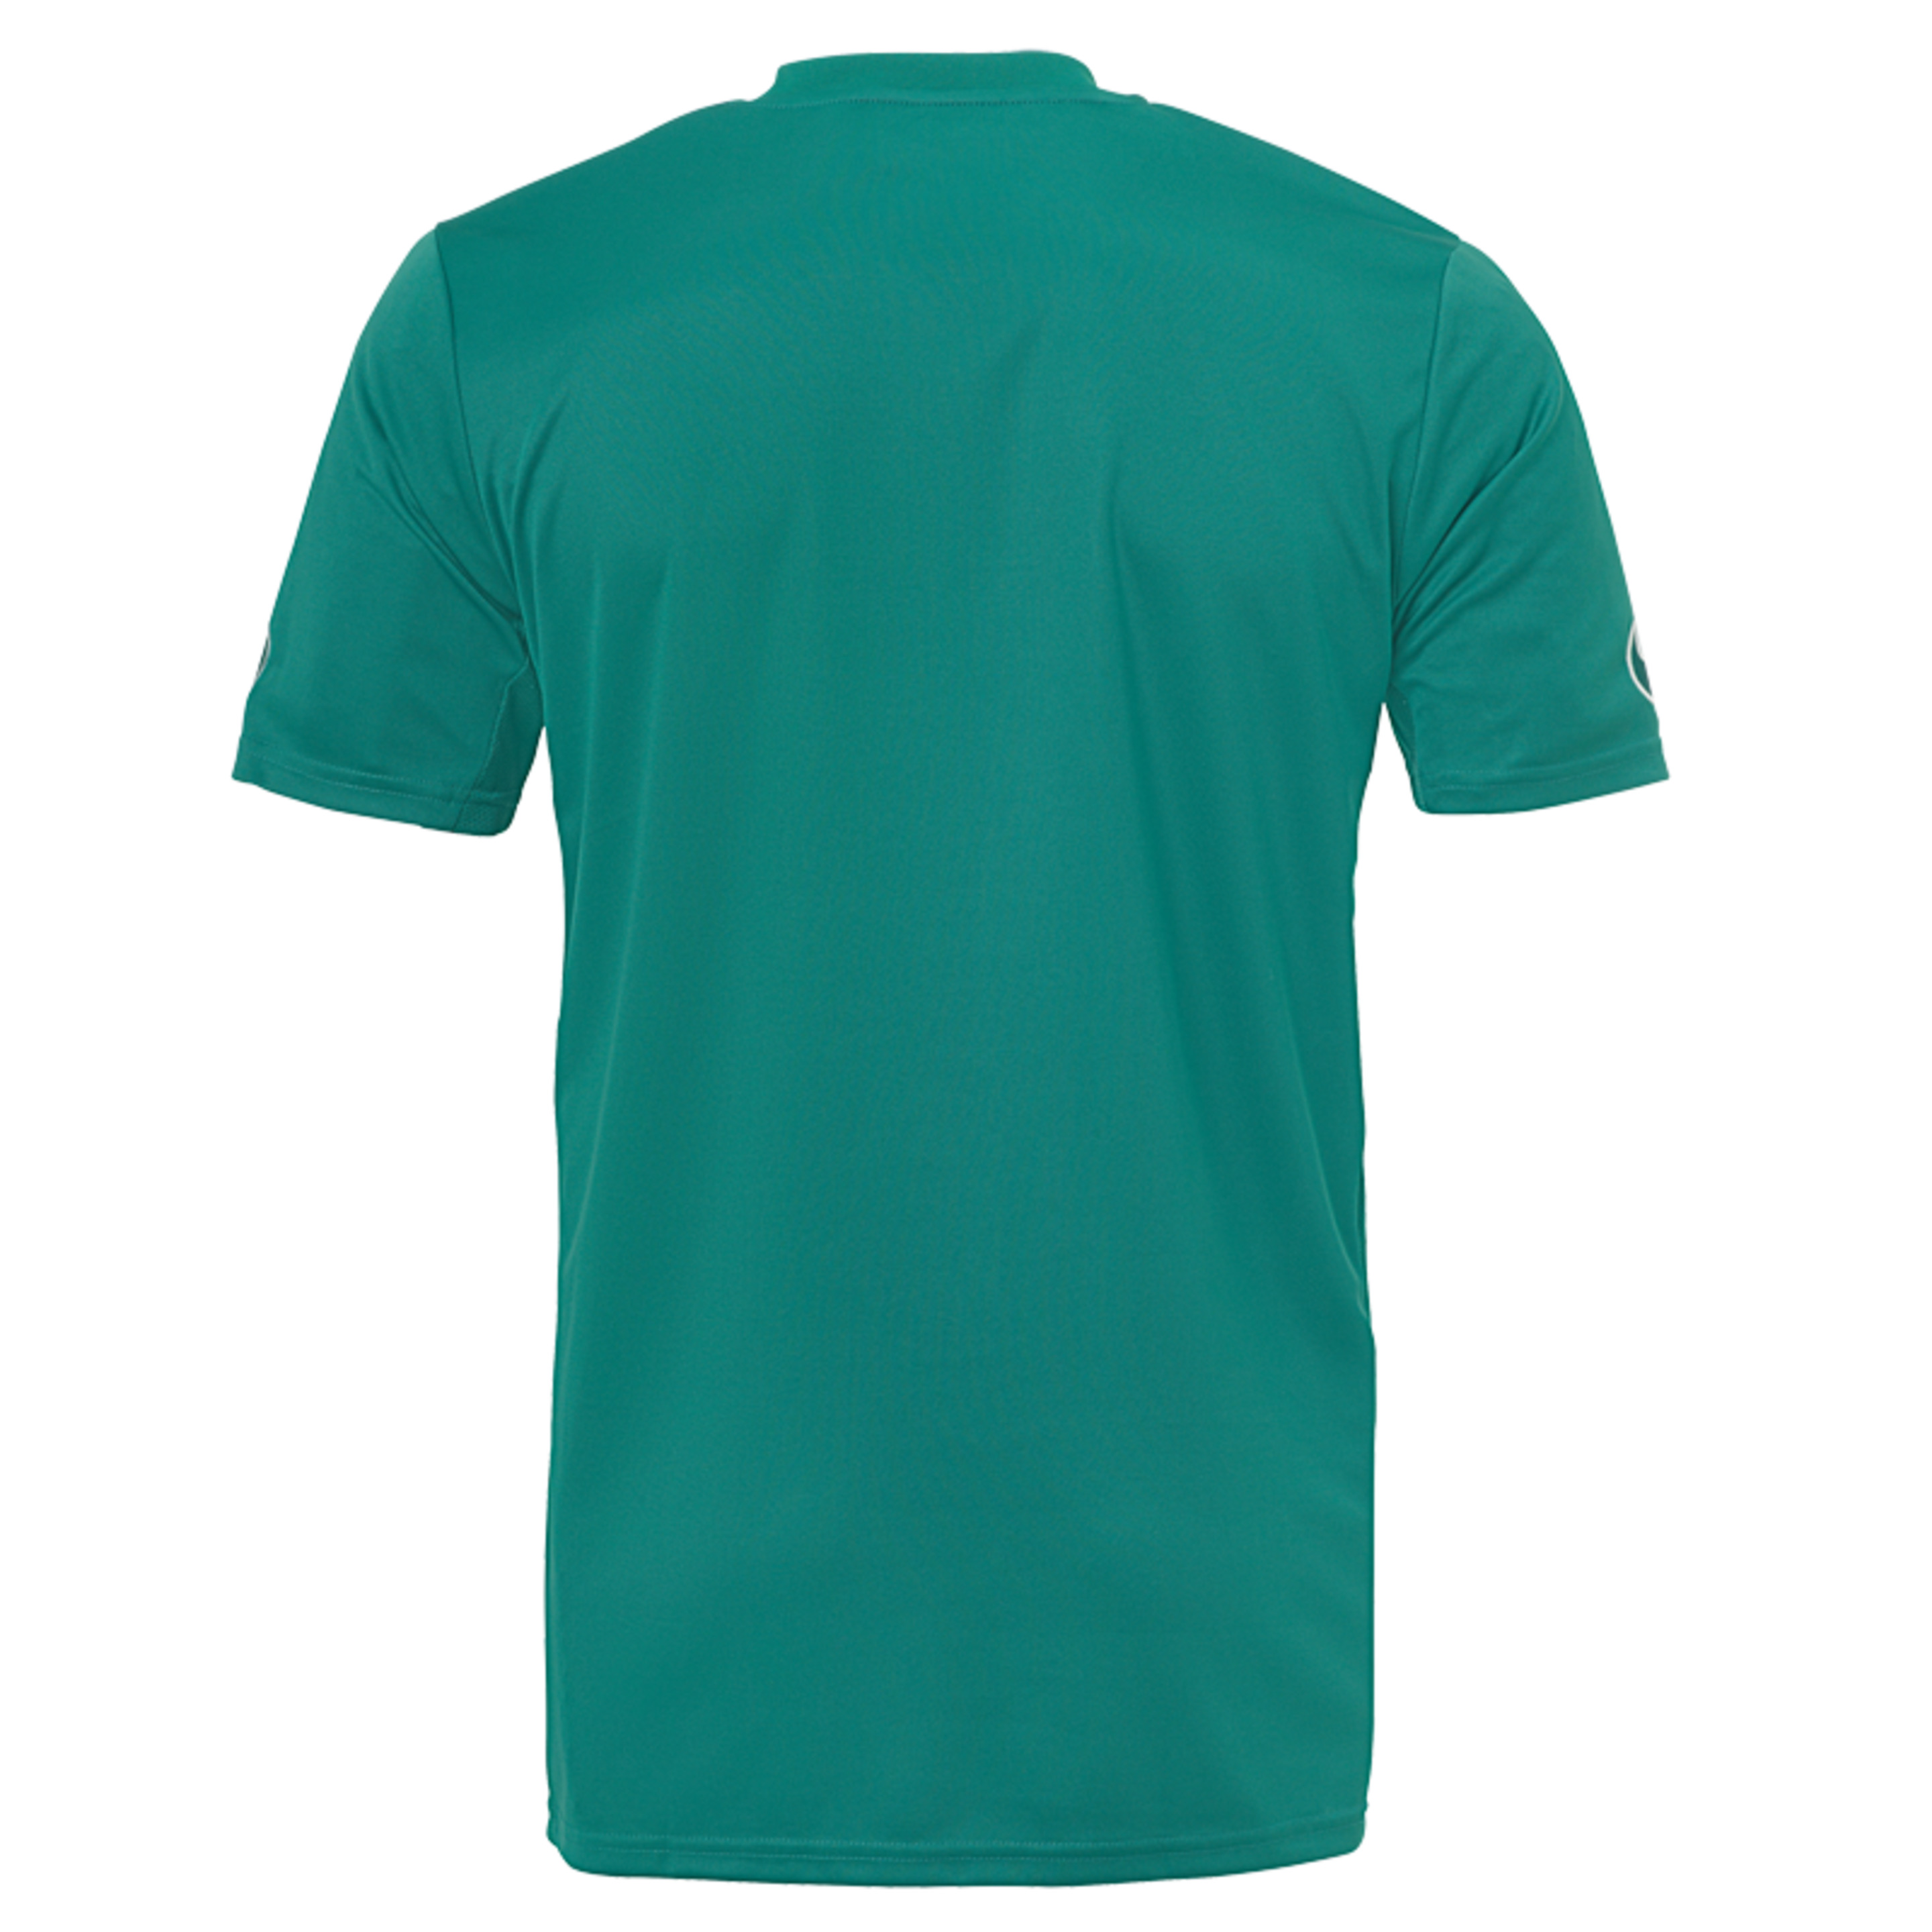 Hattrick Camiseta Mc Lagoon Uhlsport - verde - Hattrick Camiseta Mc Lagoon Uhlsport  MKP